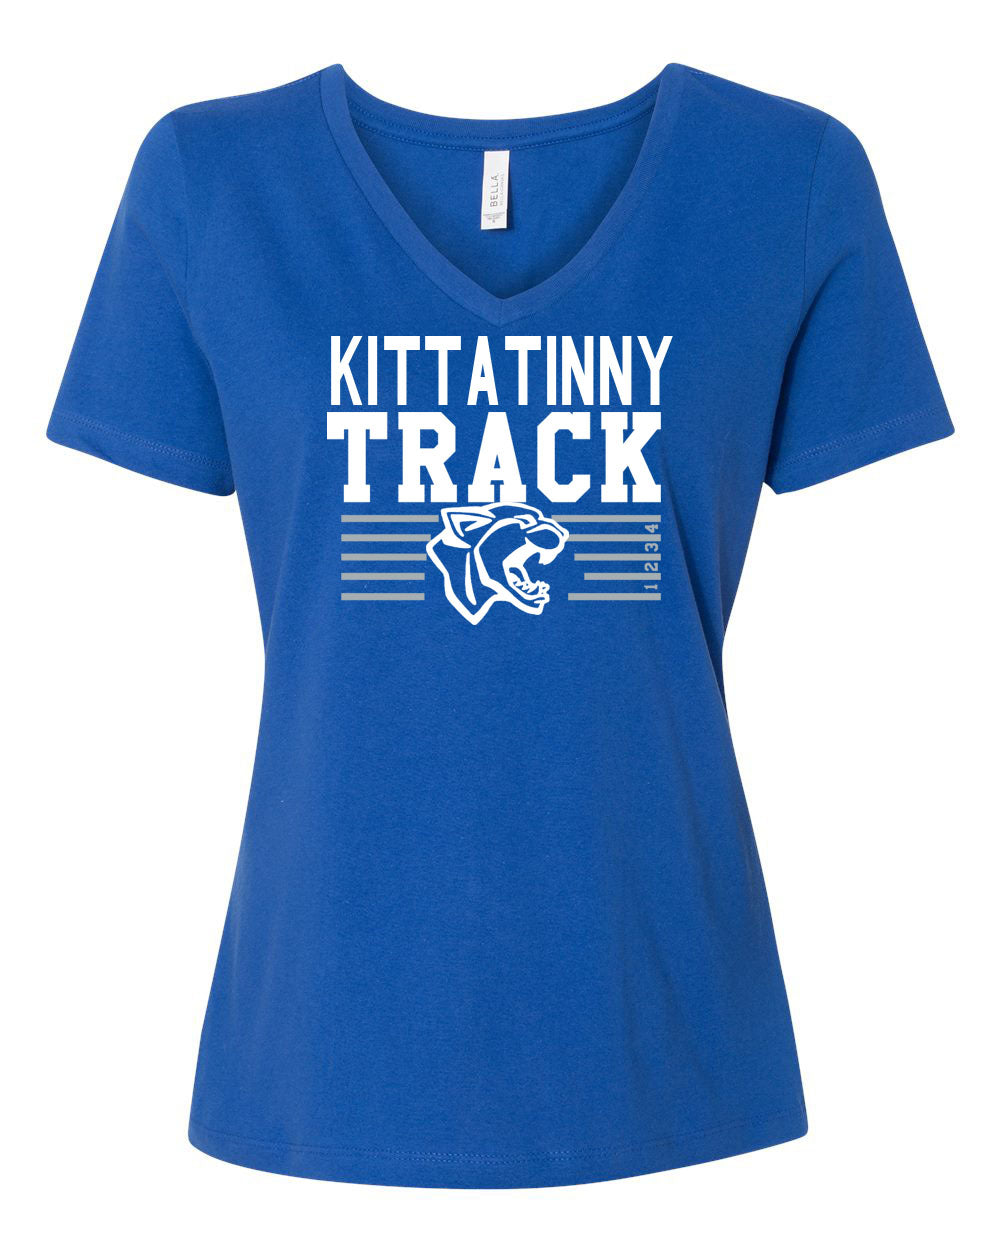 Kittatinny Track Design 5 V-neck T-Shirt